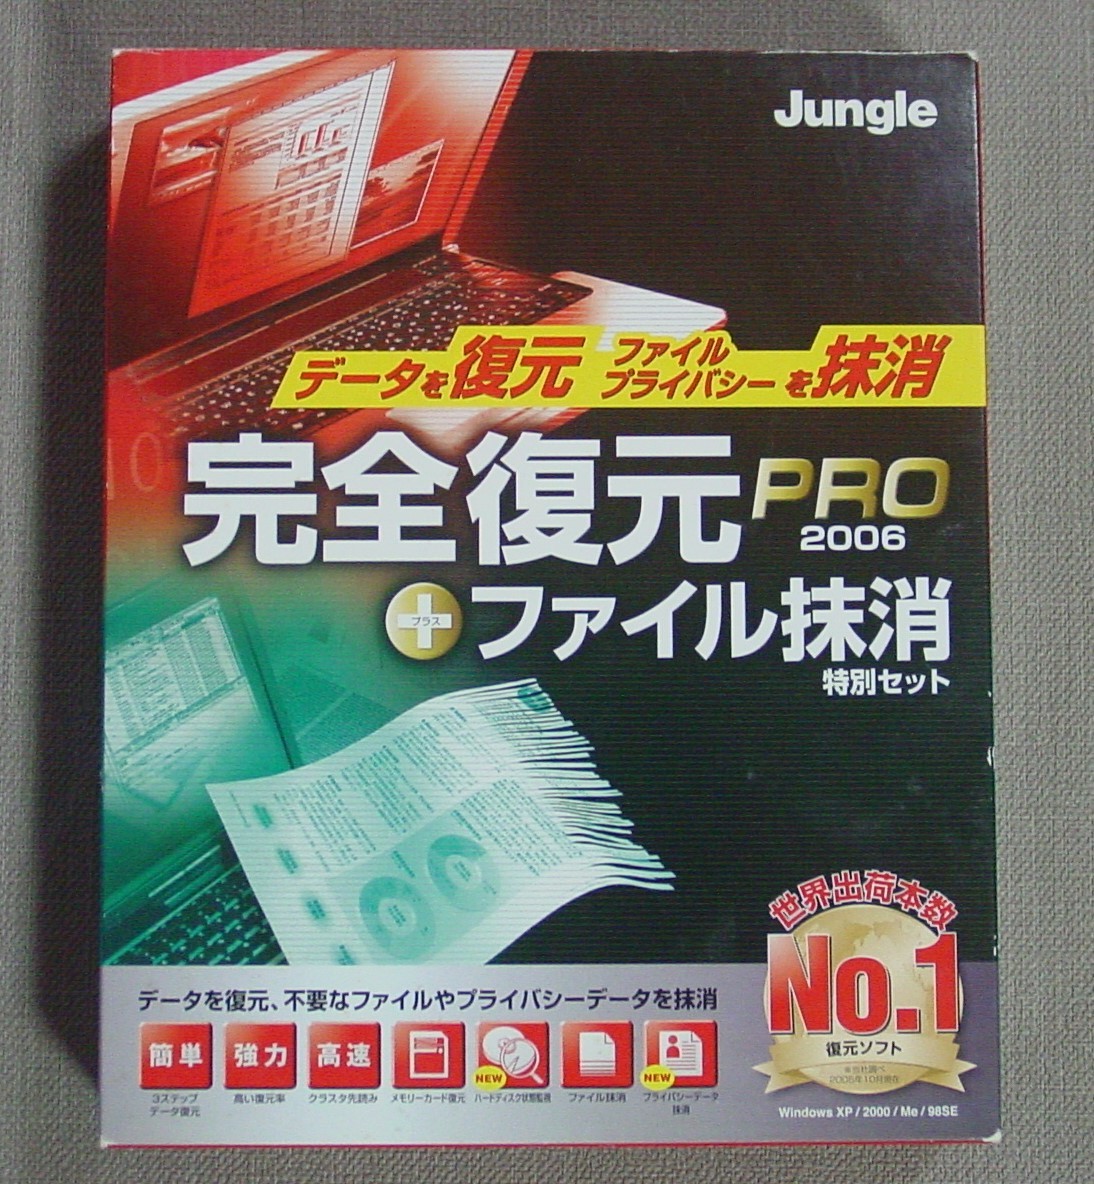 Jungle 完全復元PRO 2006＋ファイル抹消 特別セット Windows XP/2000/Me/98SE 保管品 テータを復元 ファイル プライバシーを抹消の画像2